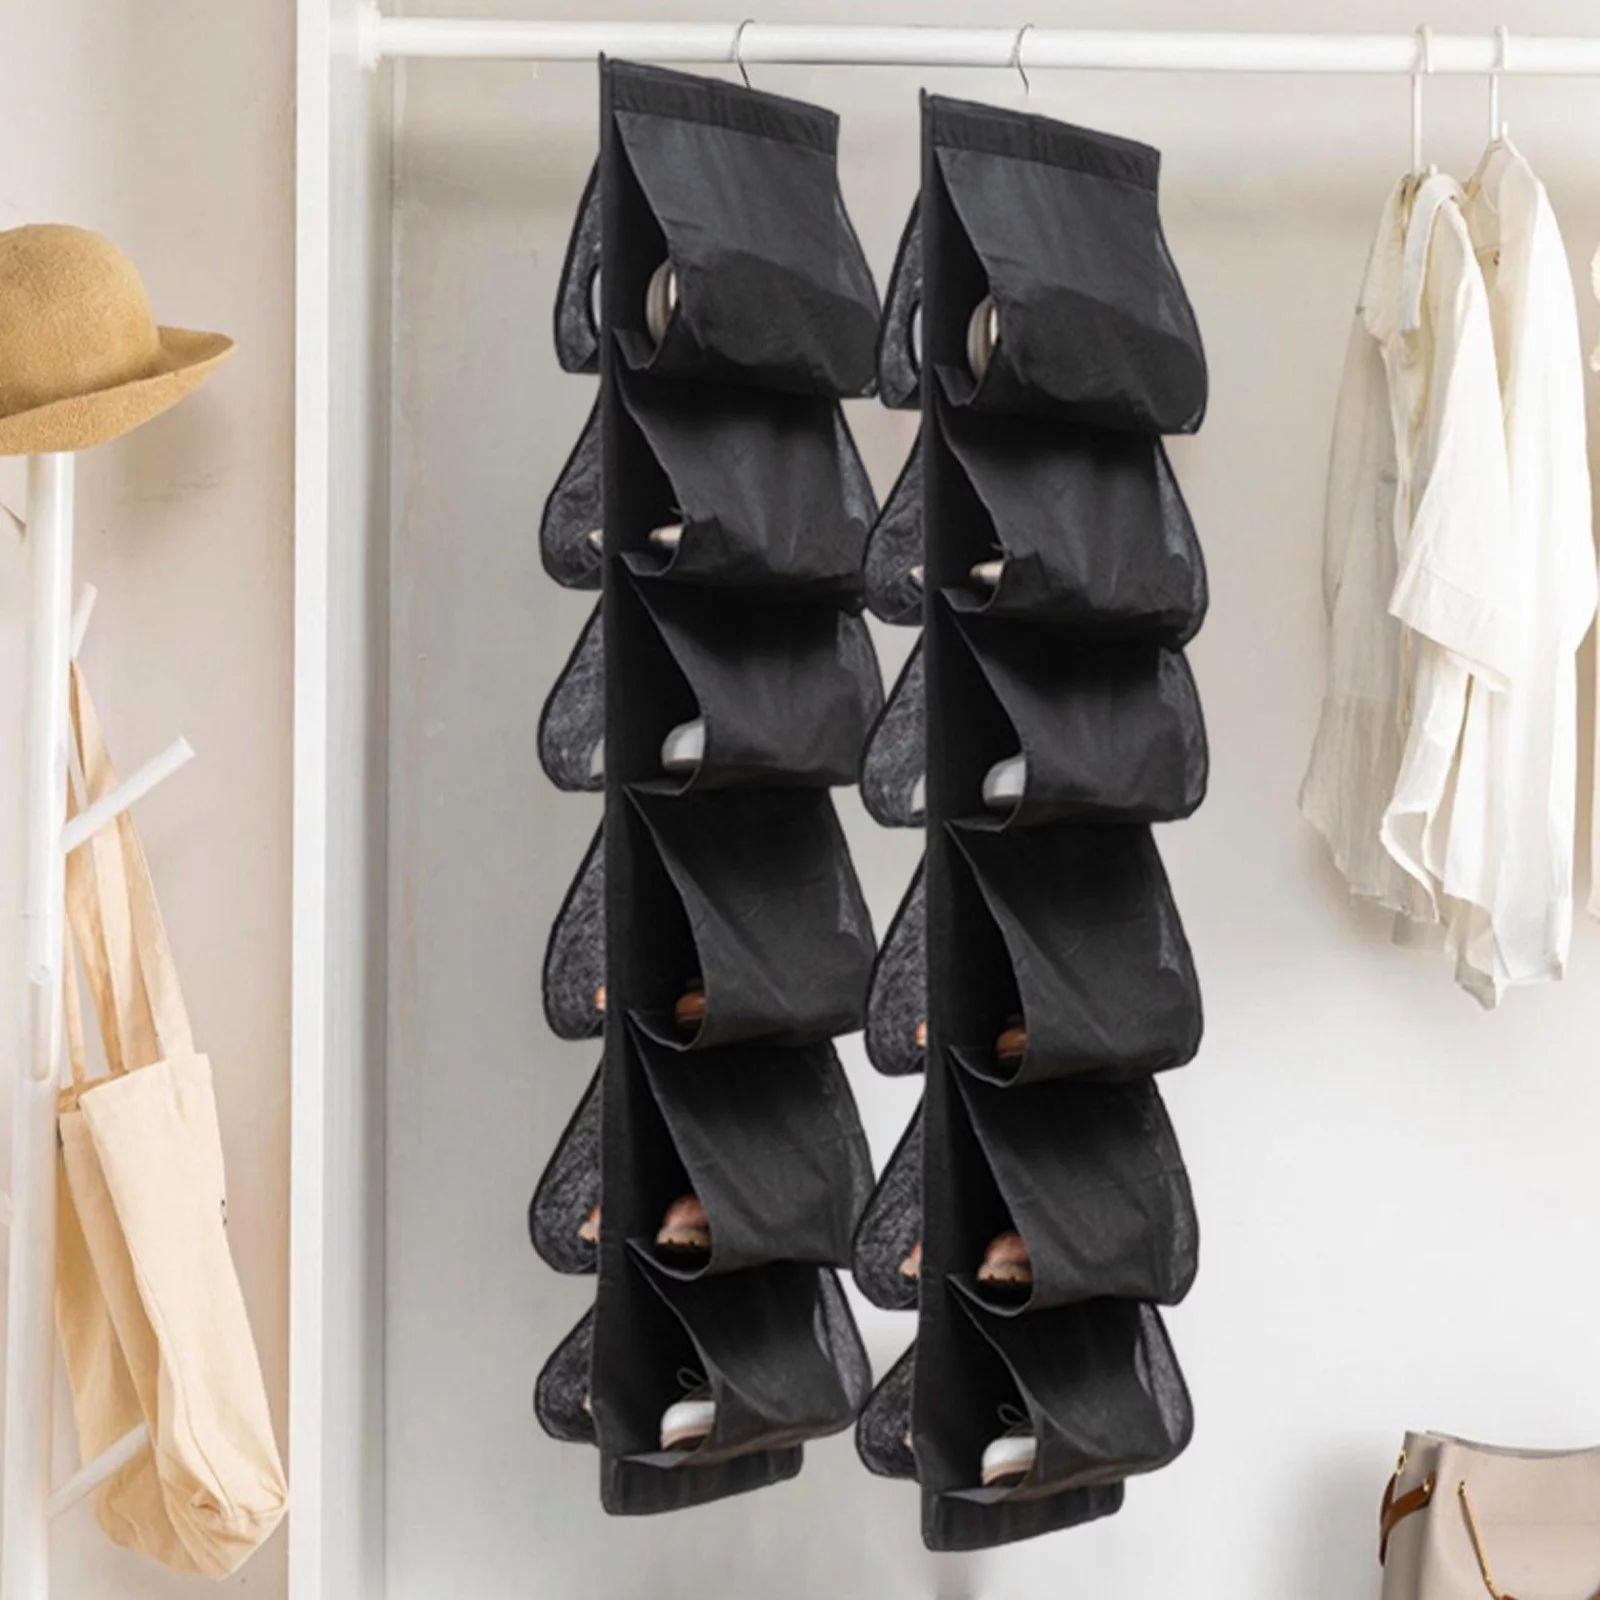 Hanging Shoe Organizer,Shoe Storage Bag Non-Woven Hanging Closet Organizers,12 Compartment Dustproof Storage Convenient Shoe Rack(Black)